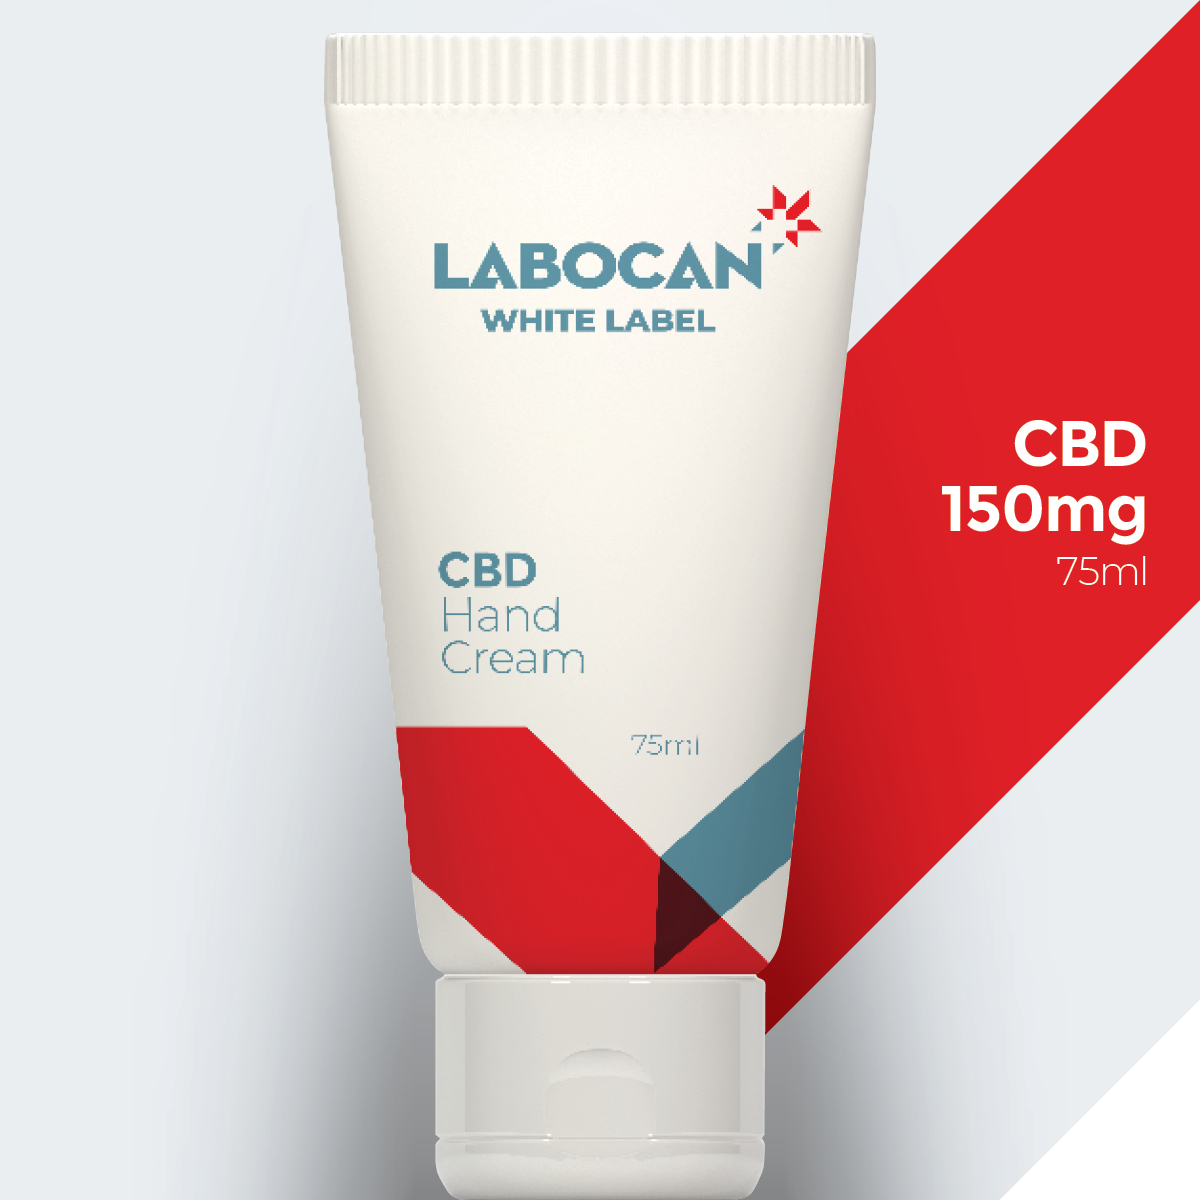 Labocan White Label CBD Hand Cream